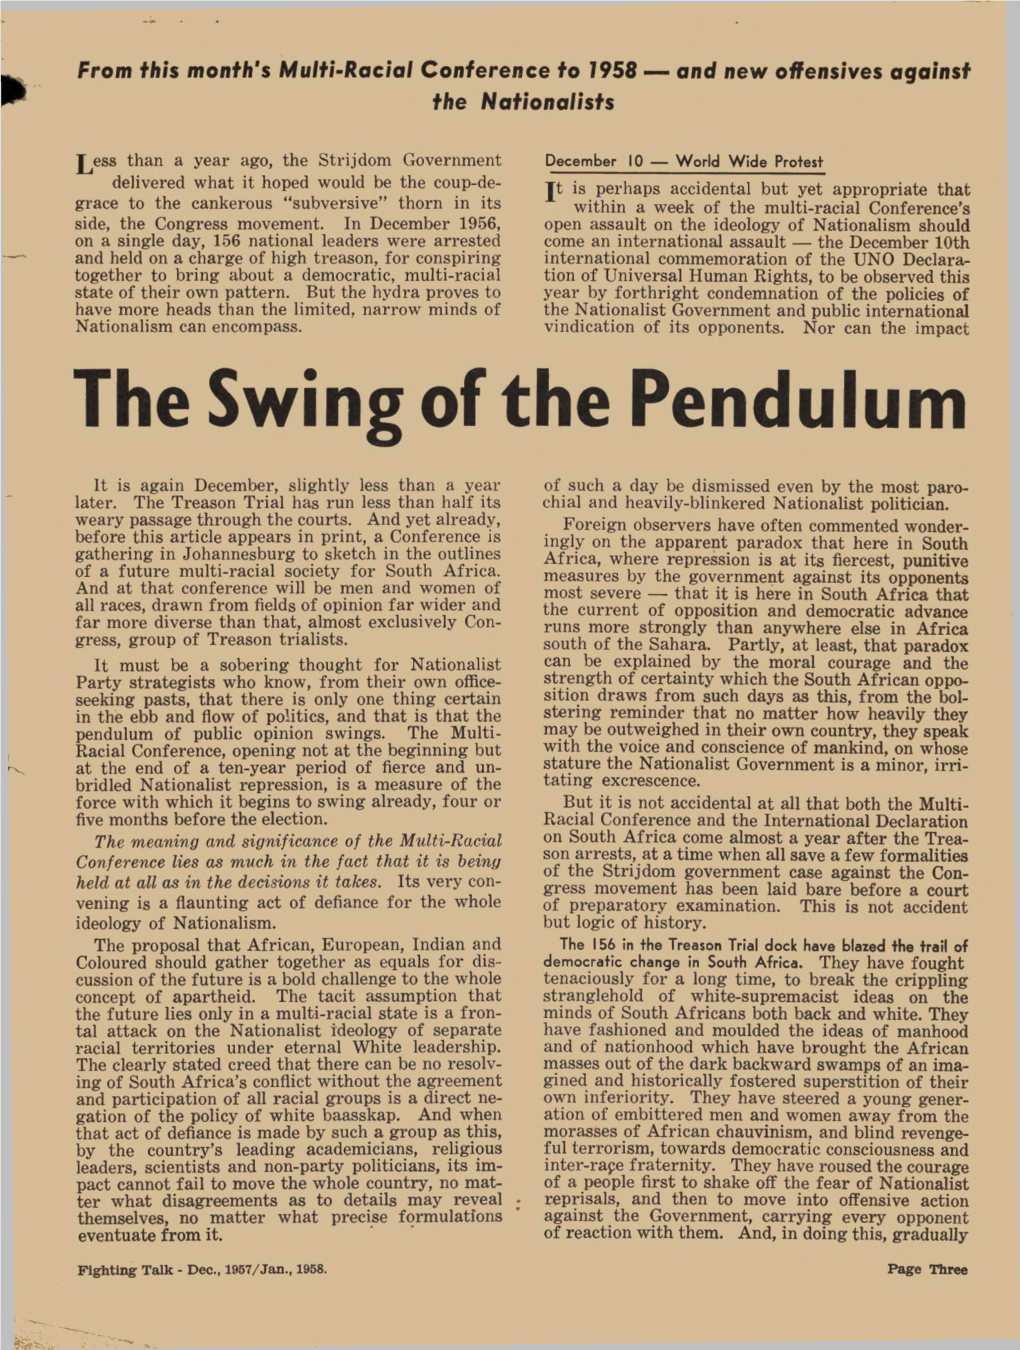 The Swing of the Pendulum